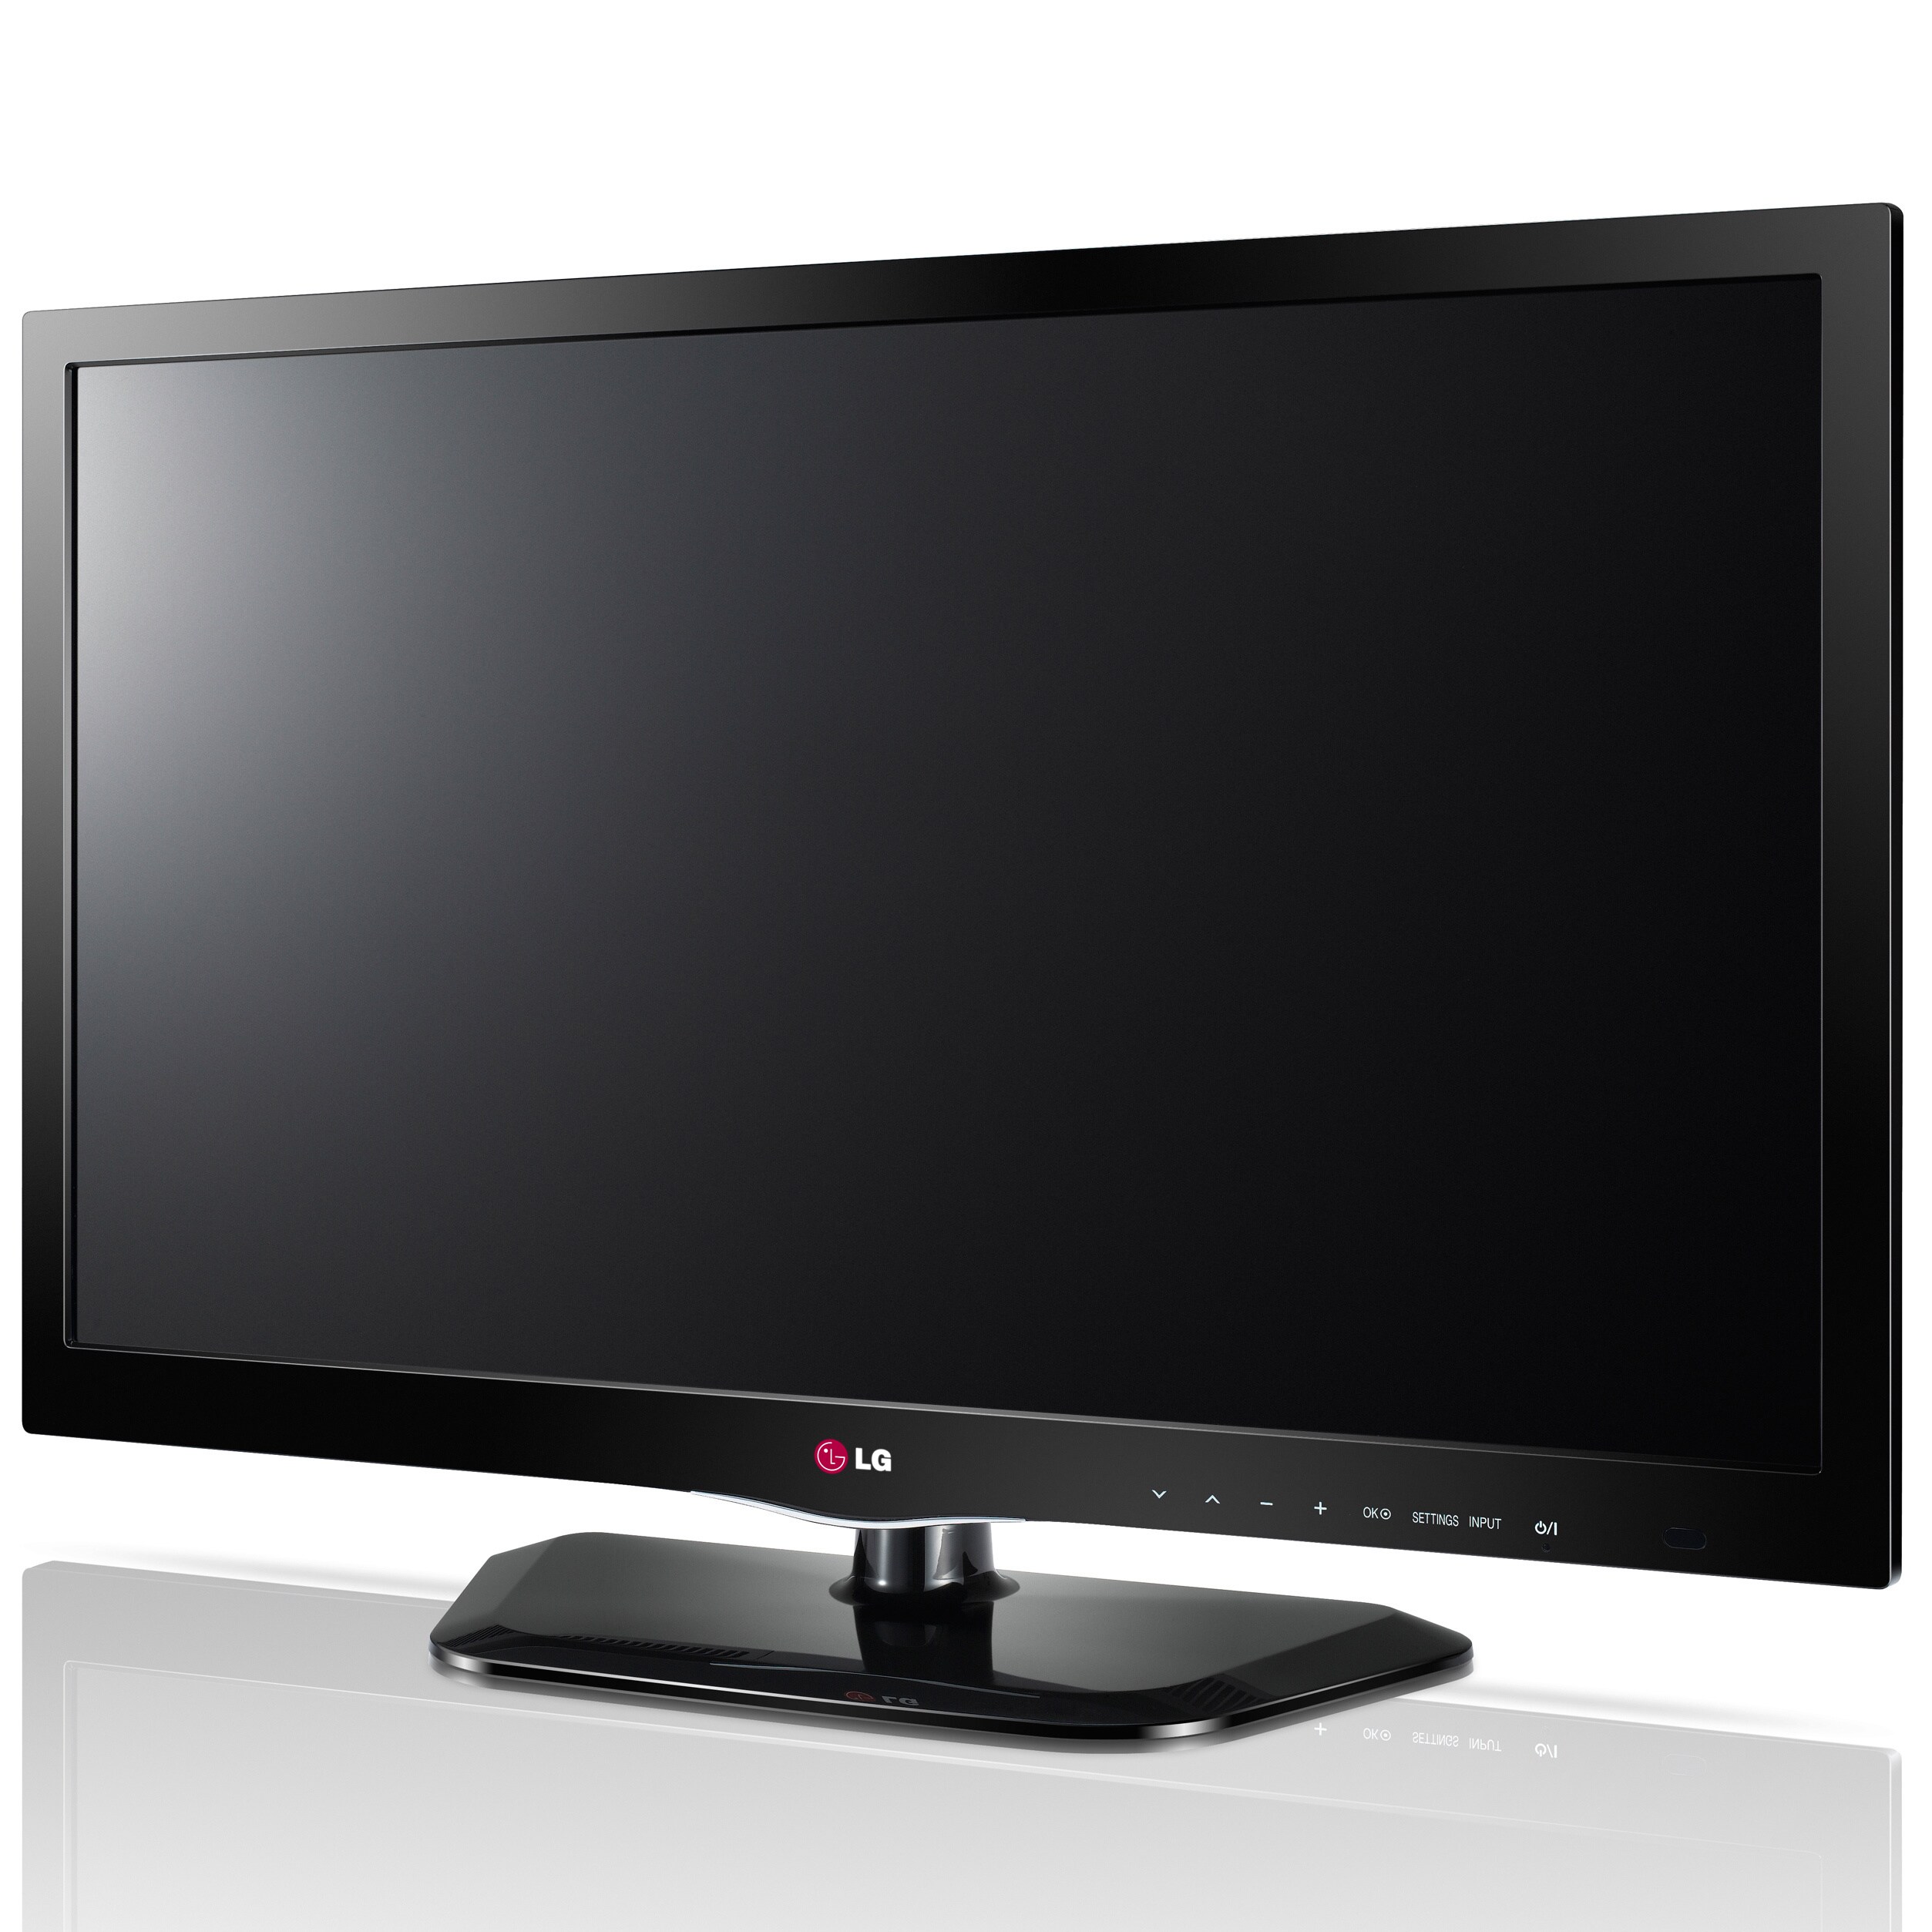 Телевизор lg l. LG 29ln450u. Телевизор LG 29ln450u. LG модель: 29ln450u. Телевизор LG 26ln450u 26".